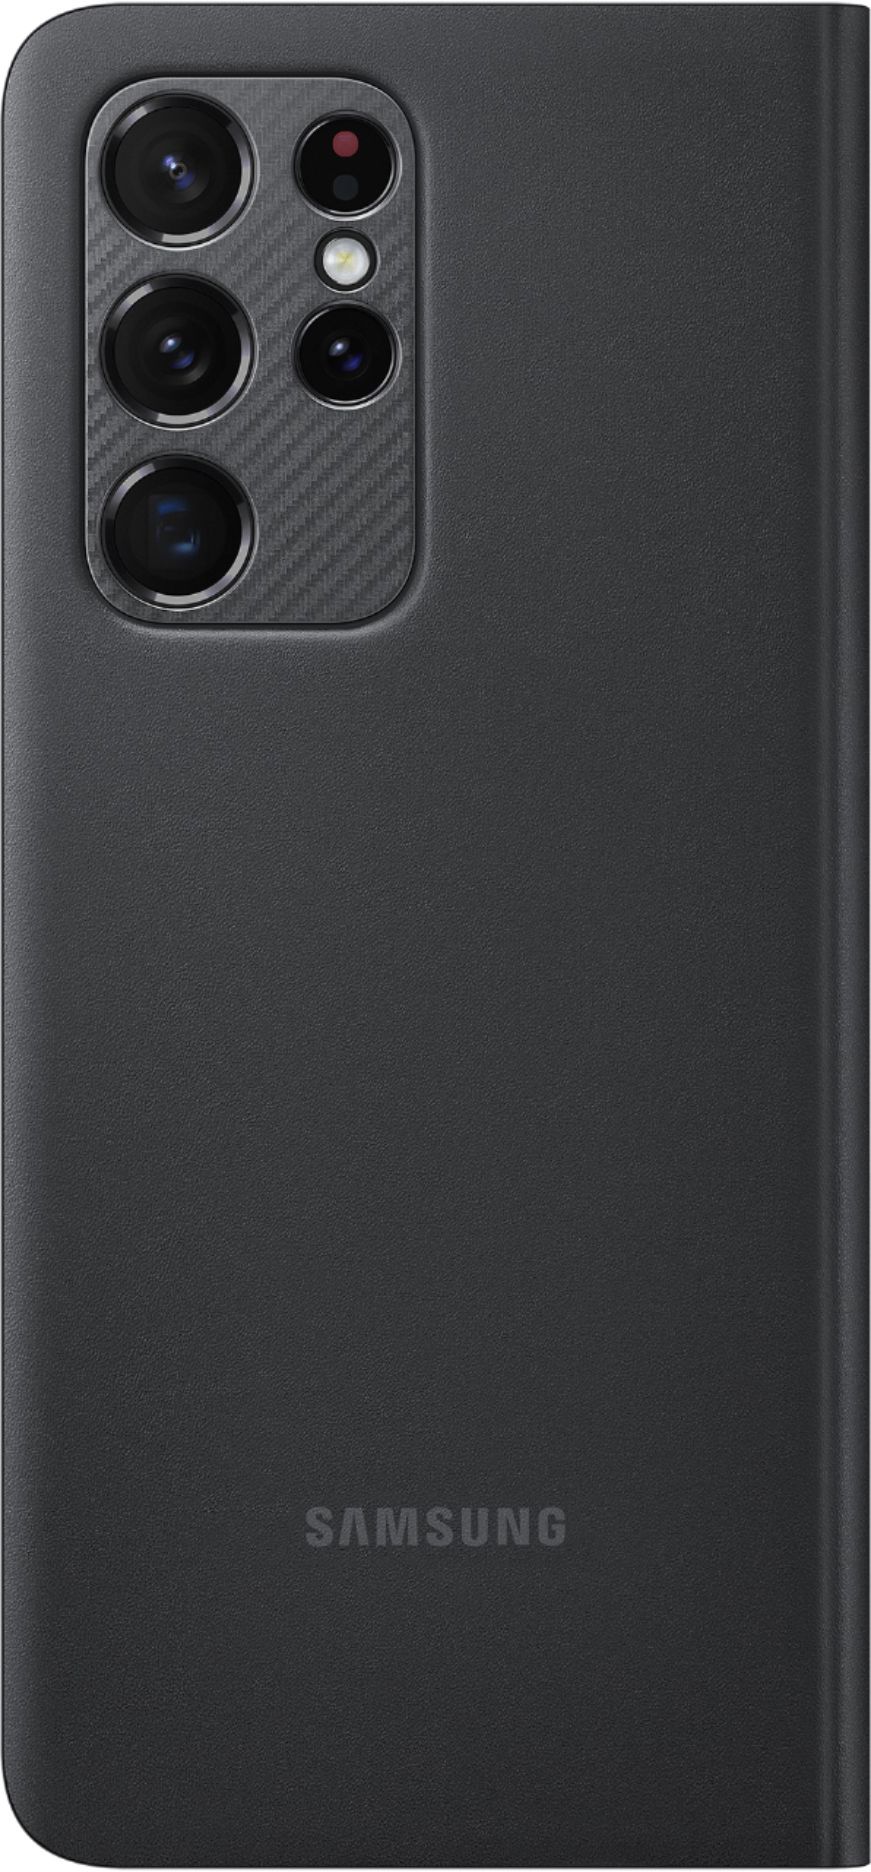 Samsung S View Flip Cover For Galaxy S21 Ultra Black Ef Zg998cbegus Best Buy